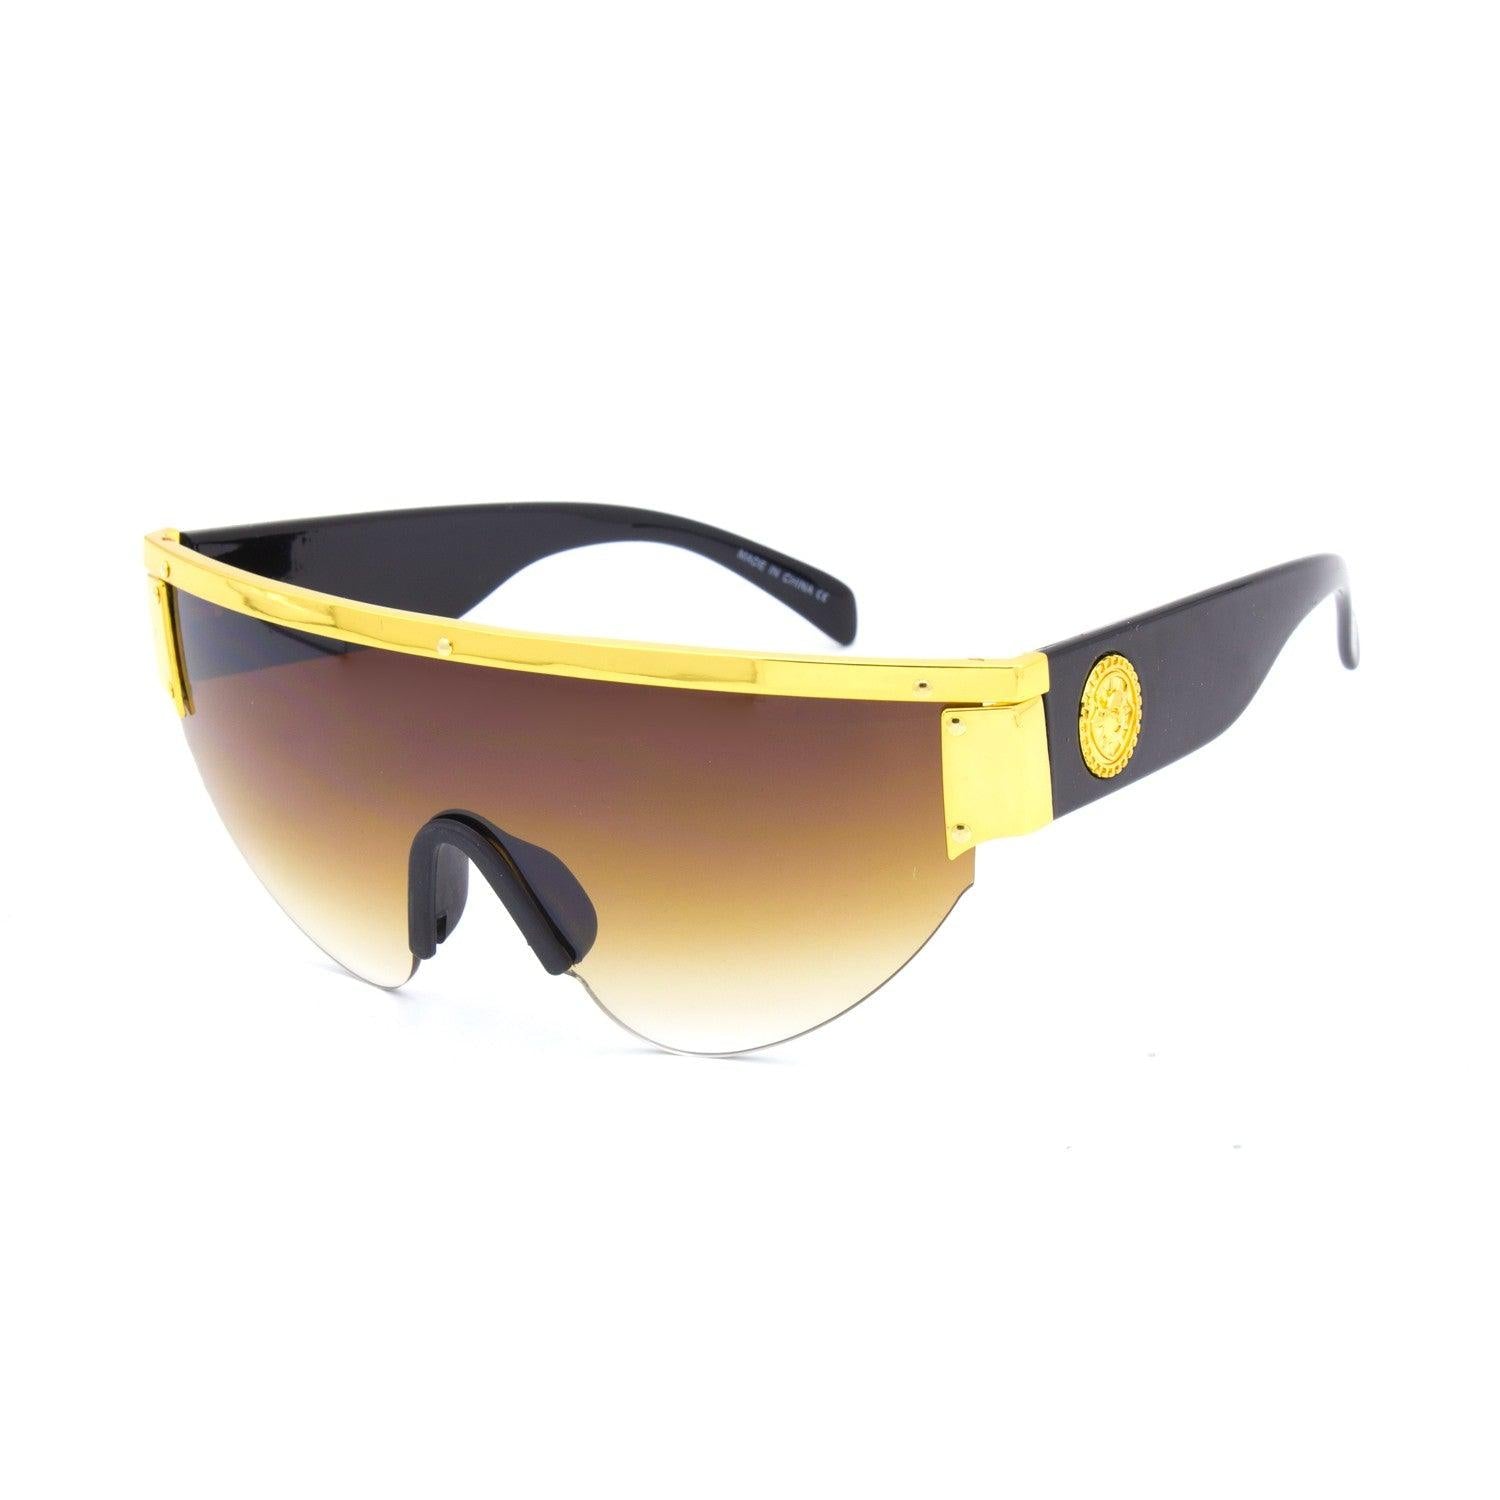 "Miami Fever" Shield Sunglasses - Weekend Shade Sunglasses